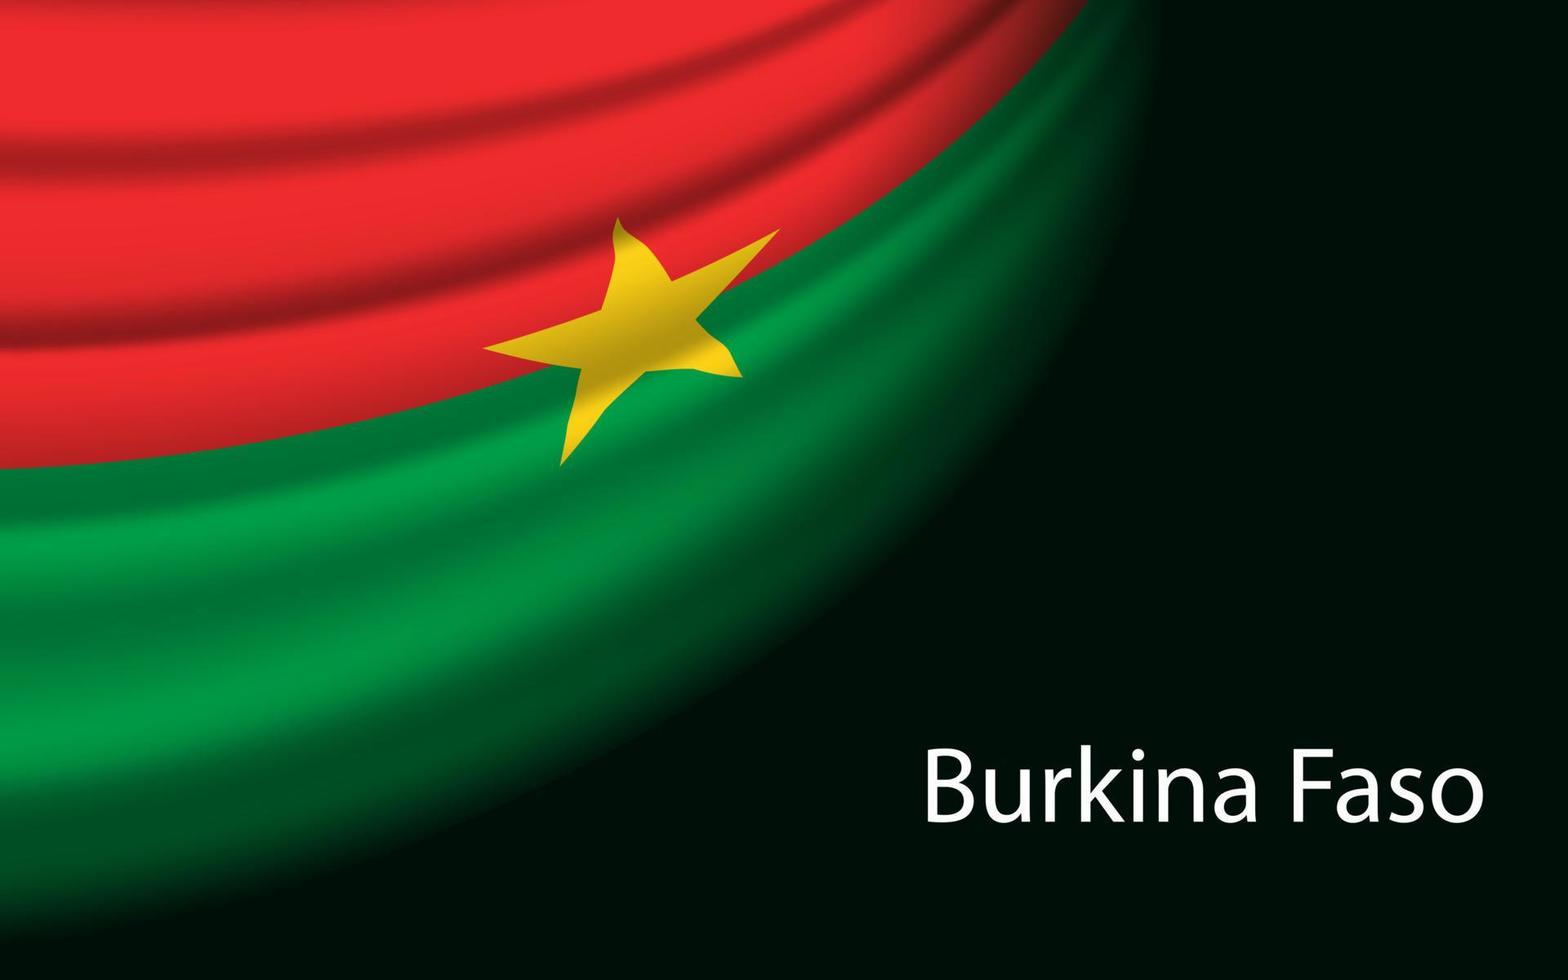 Wave flag of Burkina Faso on dark background. vector